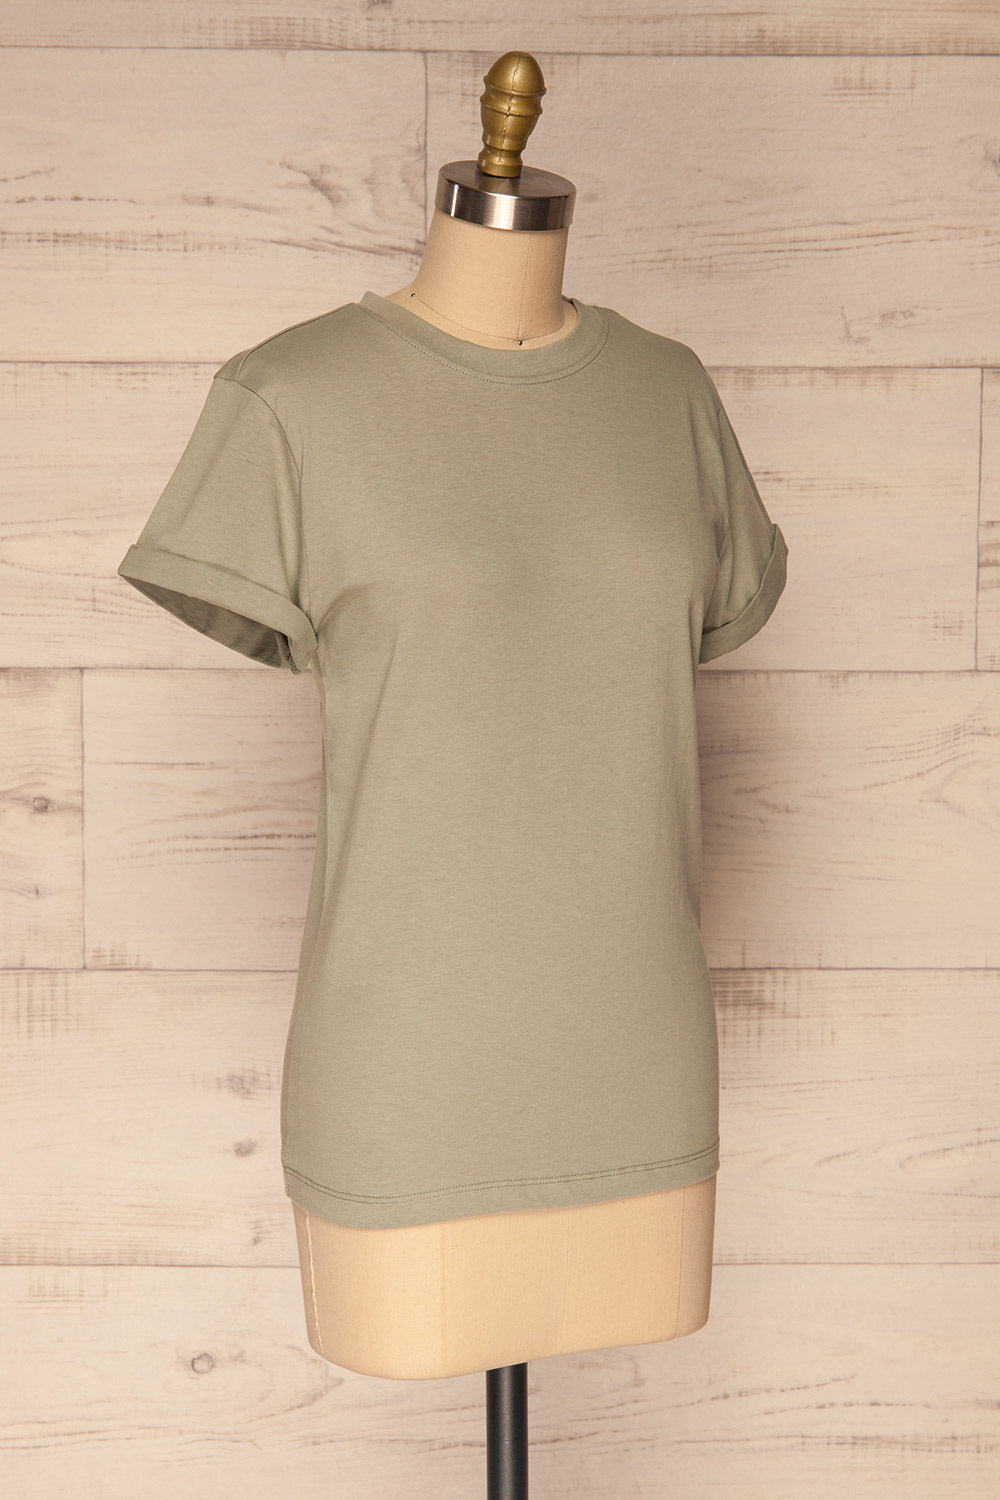 Dauve Seagrass Green Rolled Sleeves T-Shirt | La petite garçonne side view